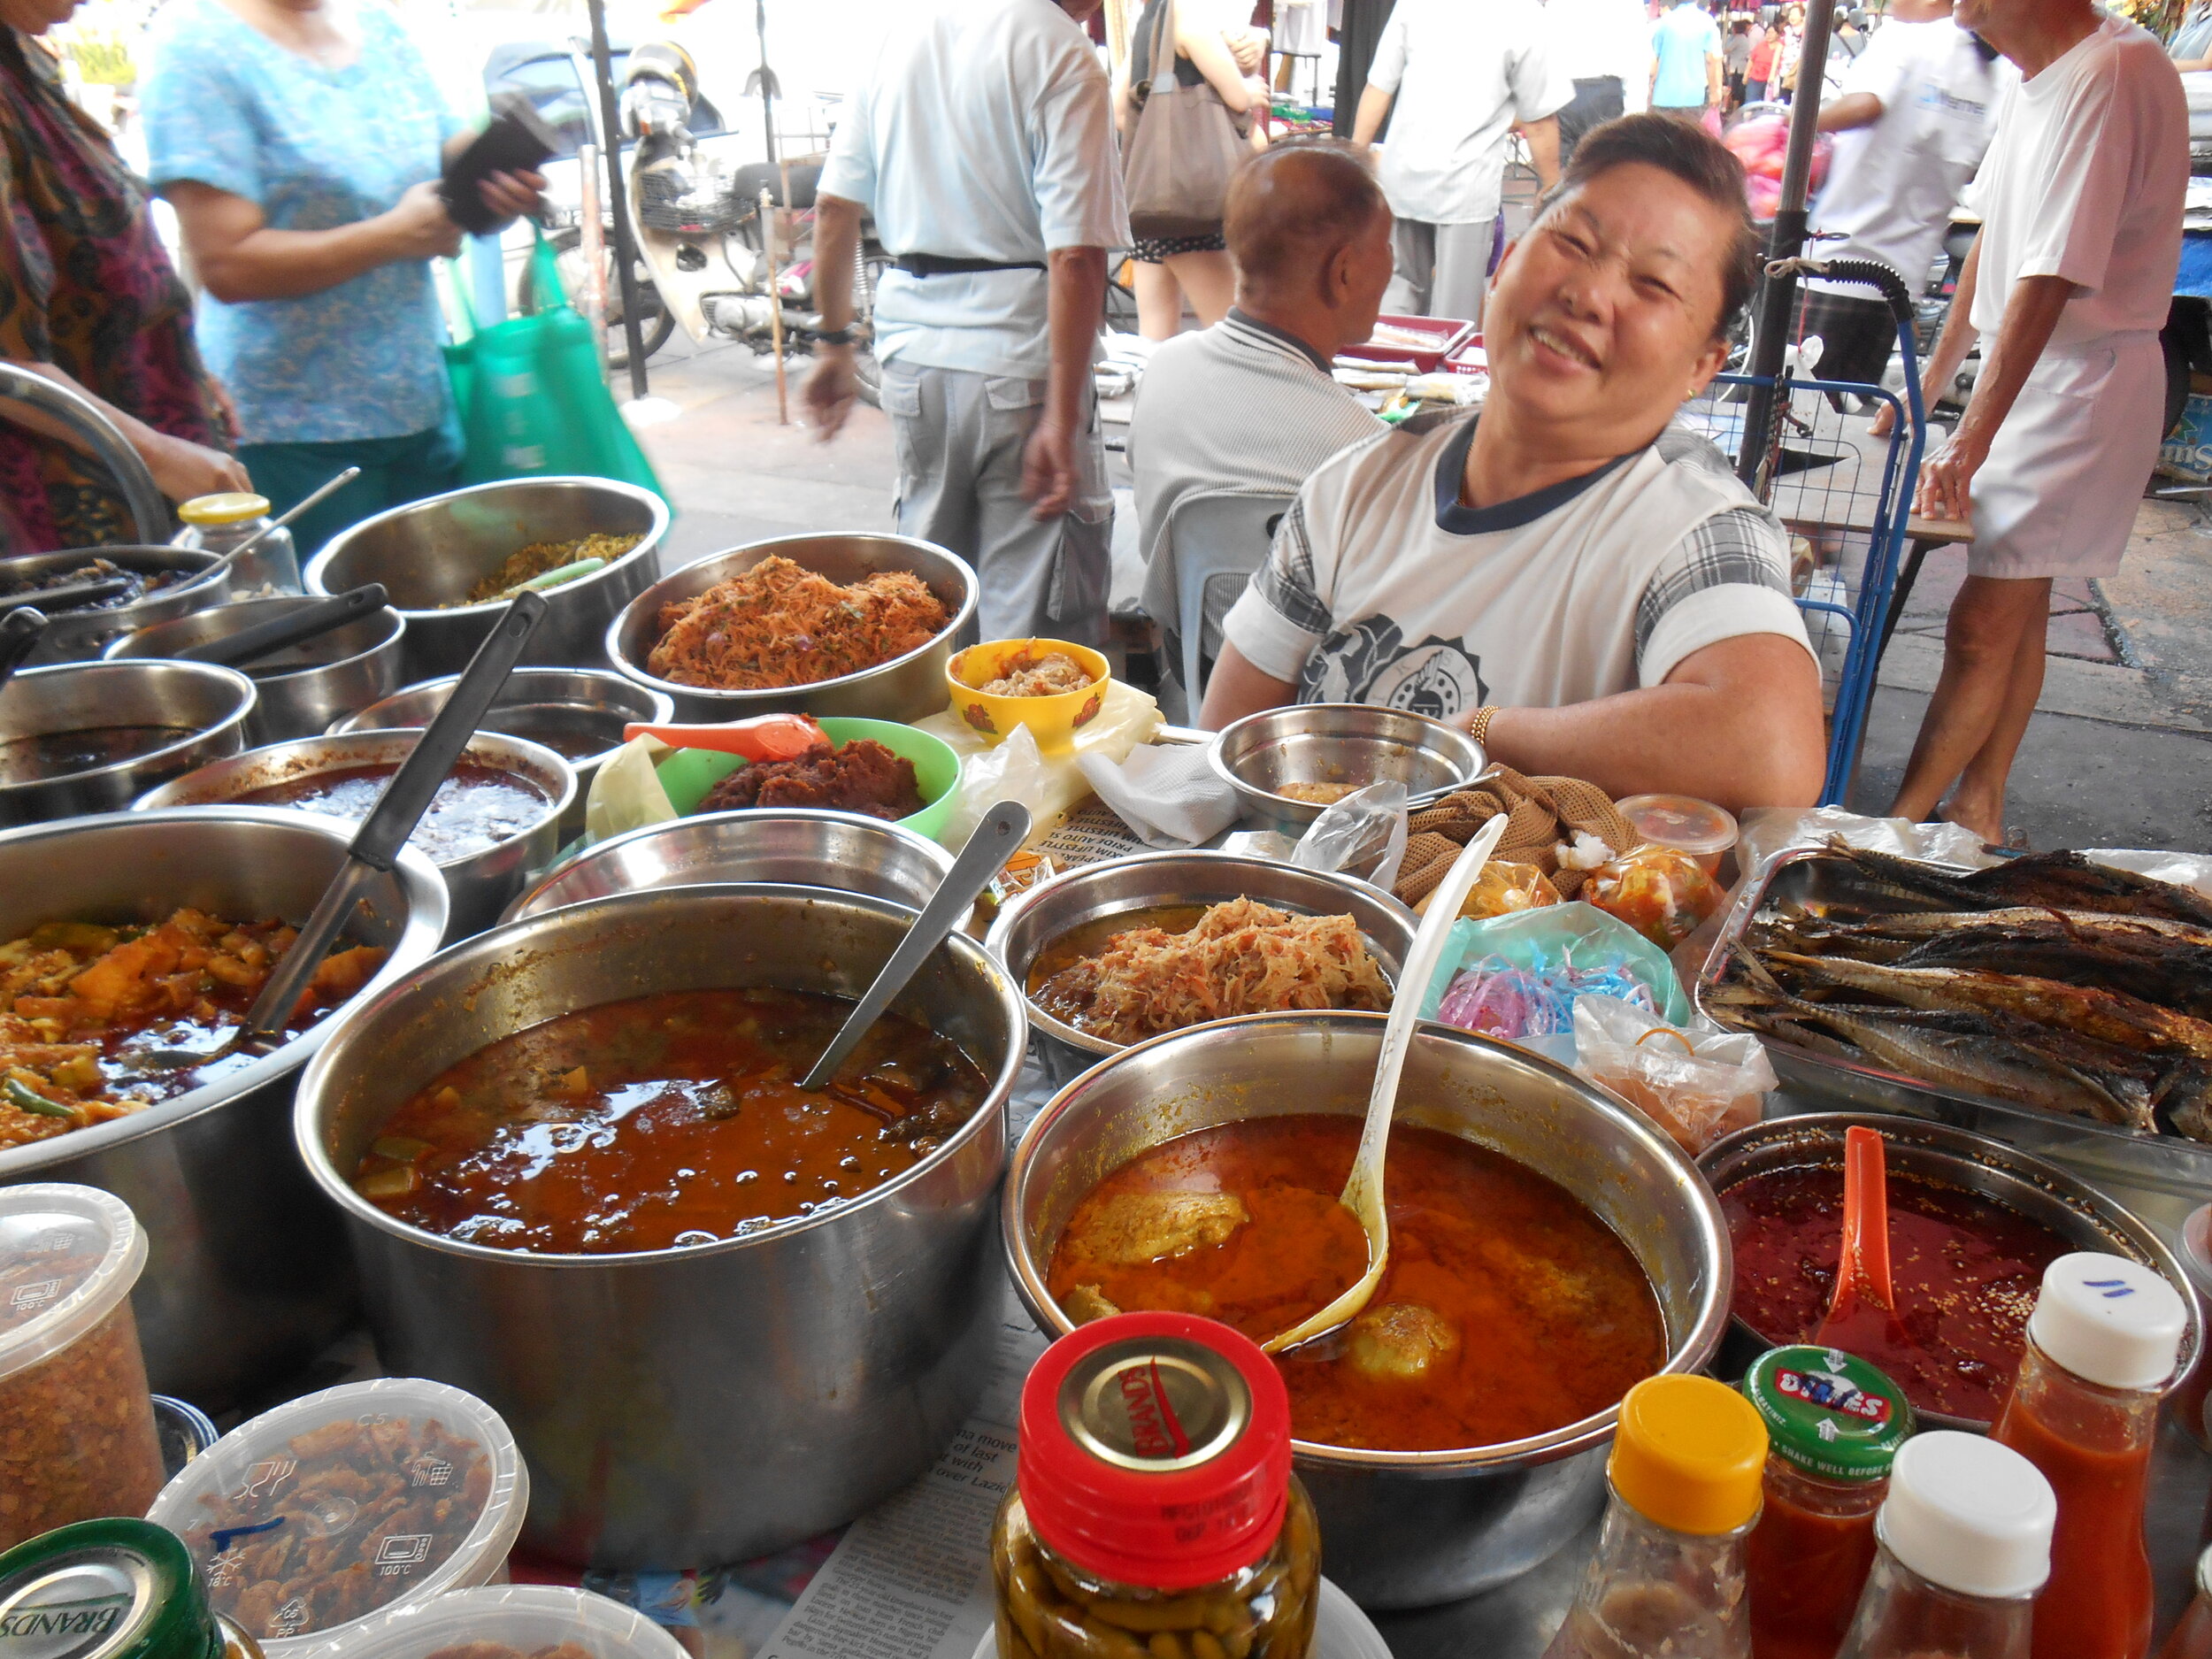 Curry Vendor Pulau Tikus Market Penang - Copy.JPG